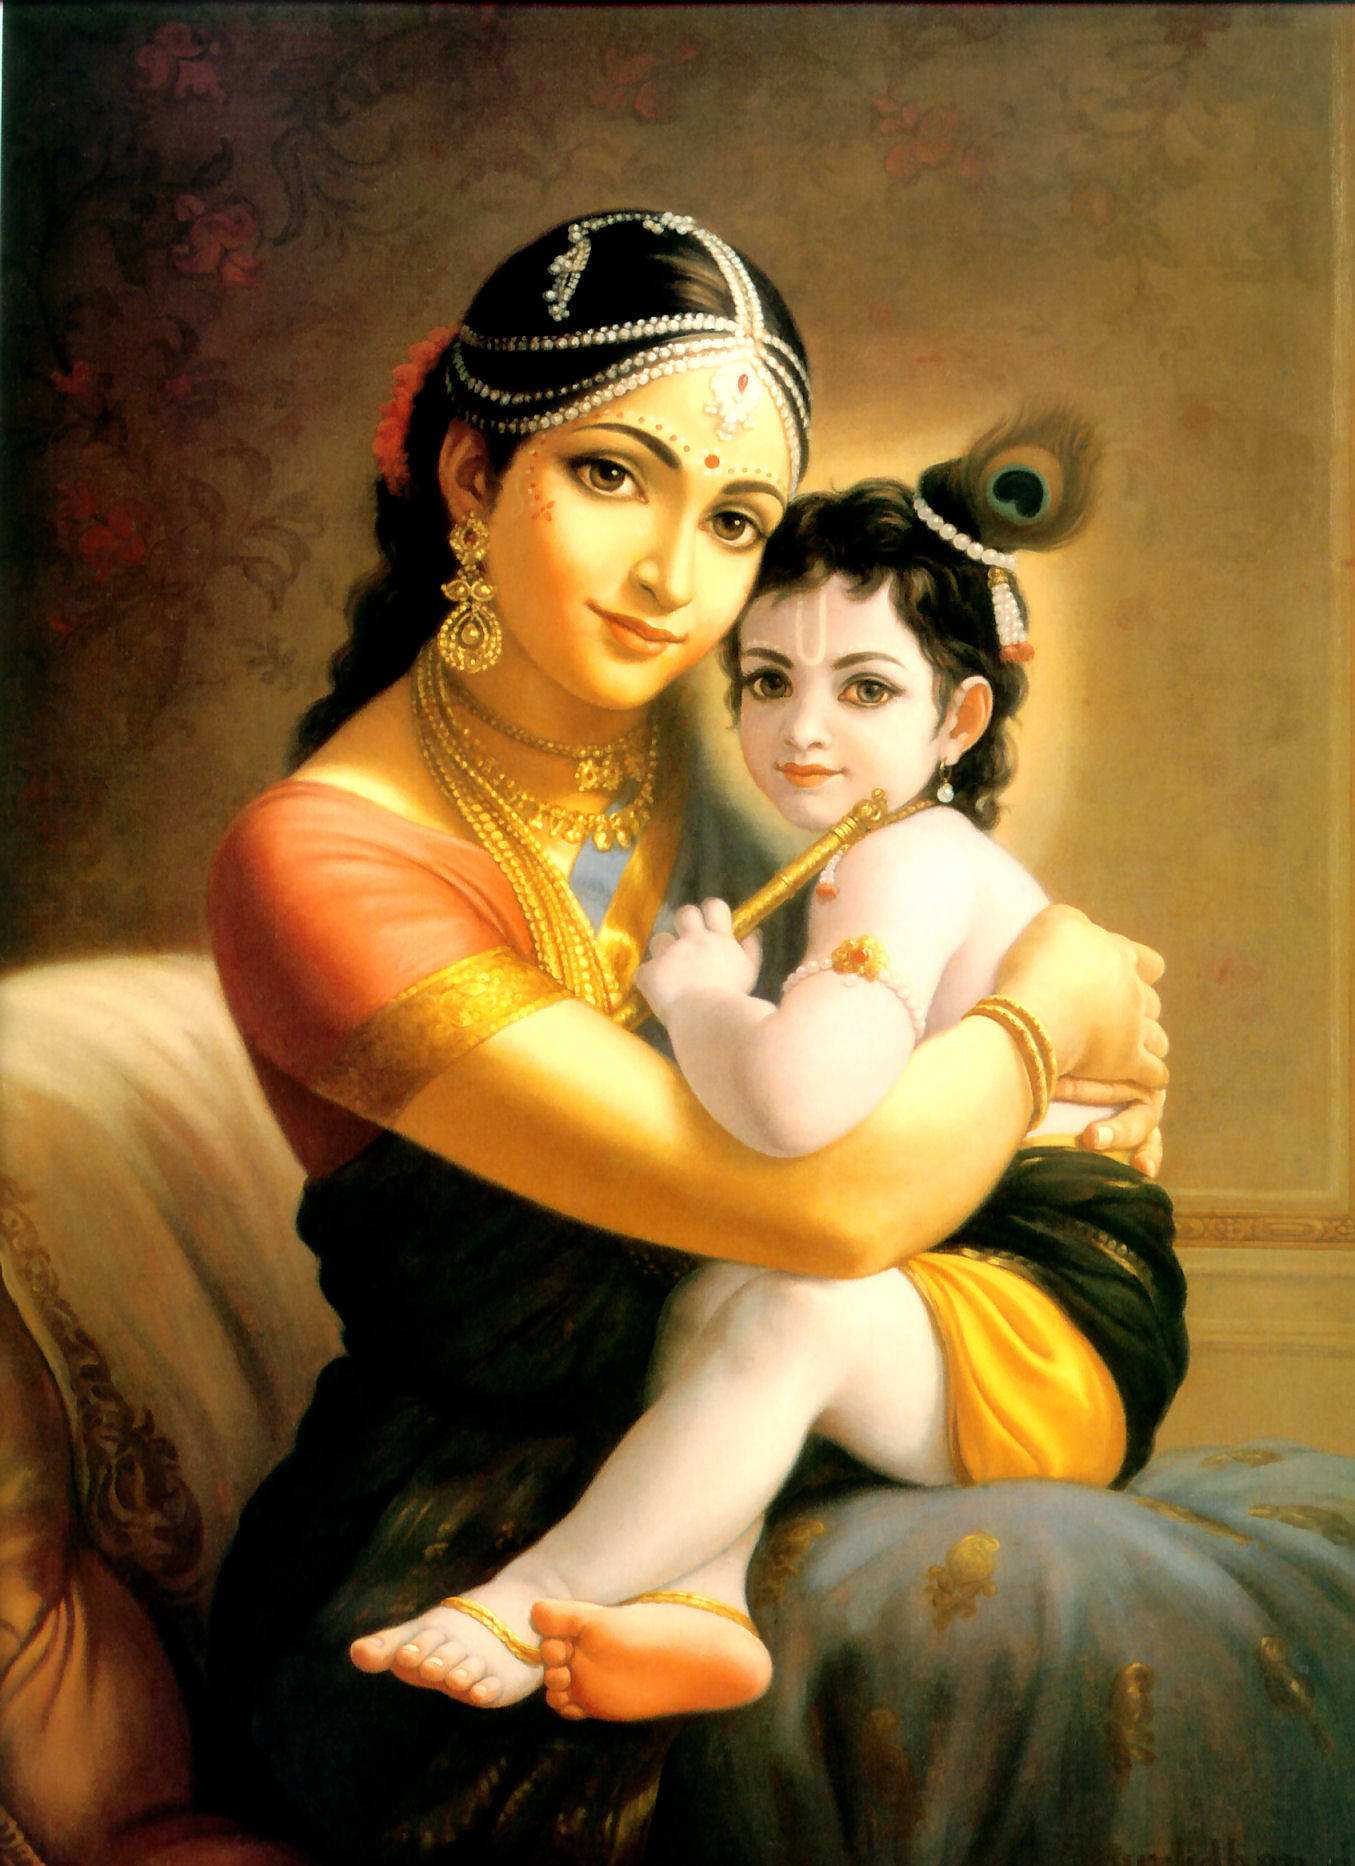 Caption: Divine Interaction - Krishna On Phone Background